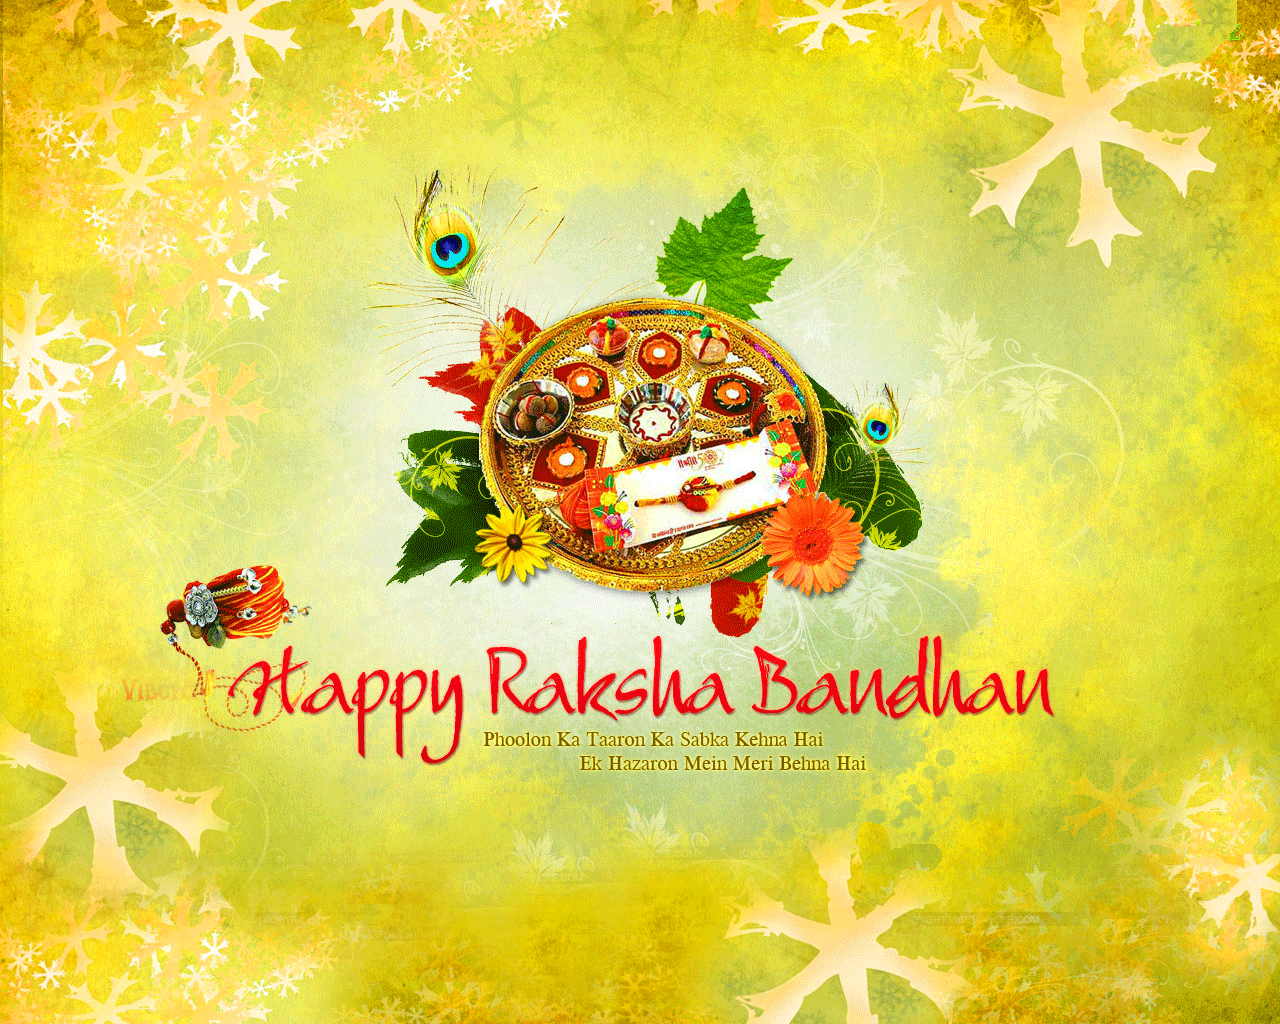 Happy Raksha Bandhan To All - 1280x1024 Wallpaper 